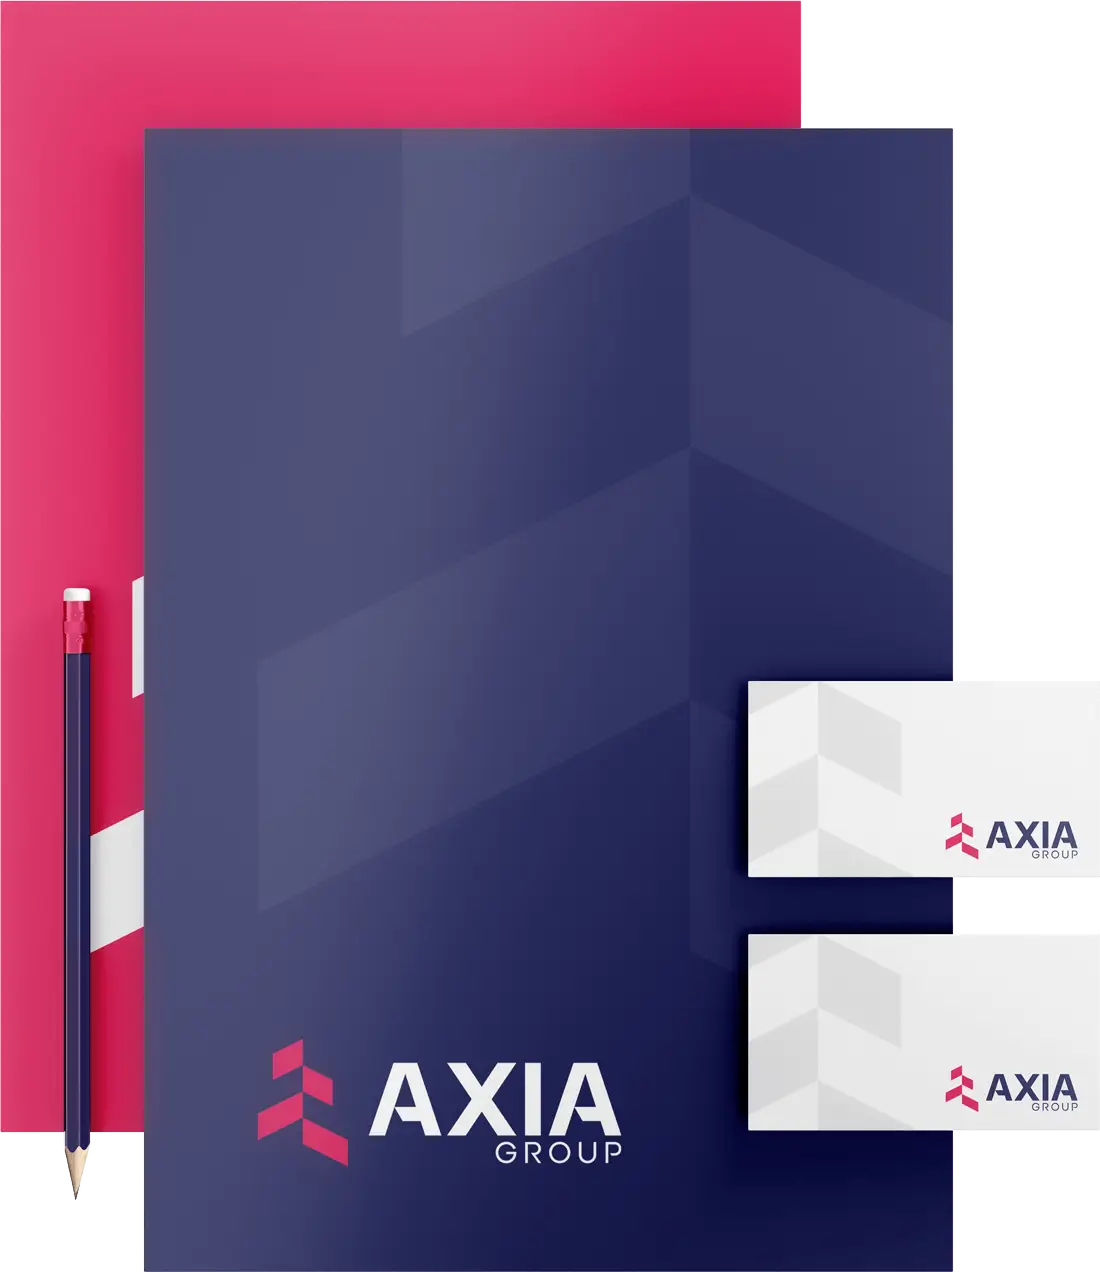 Visuel identitet til Axia Group